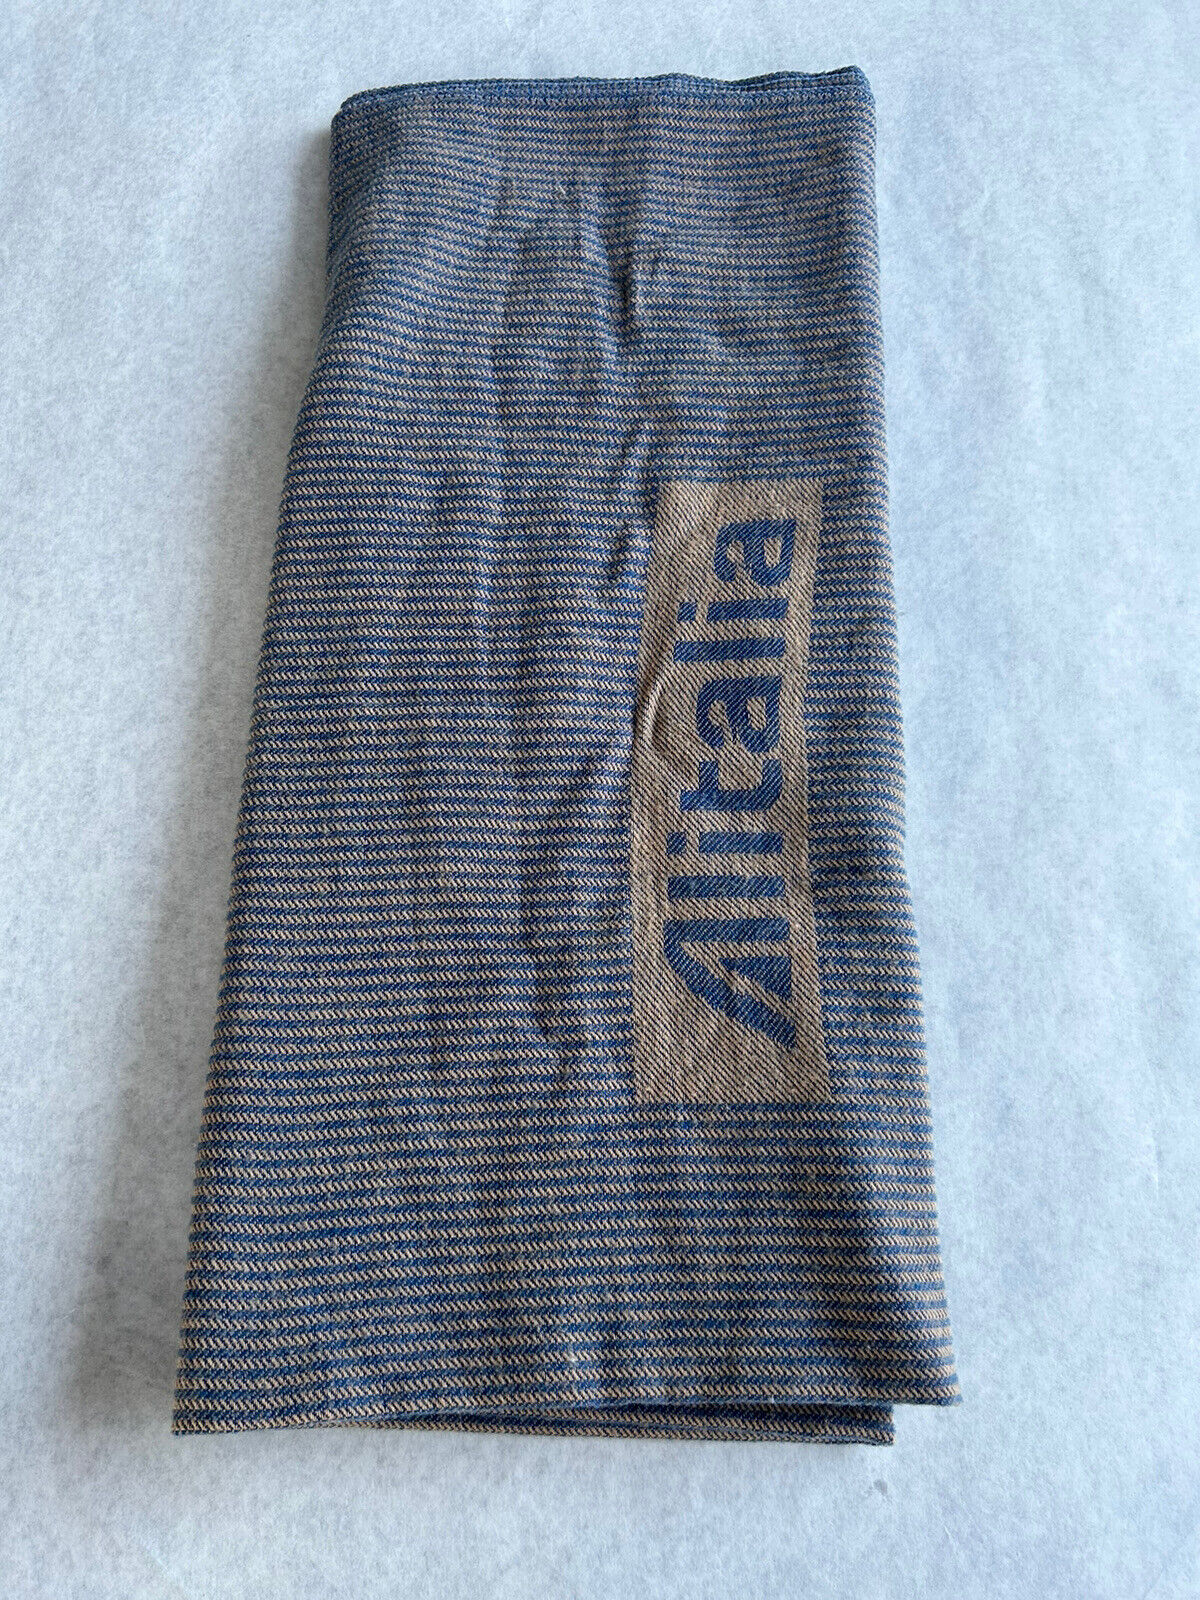 Alitalia Airlines Blue Tan Striped Inflight Blanket Lanerossi Modacrylic Italy